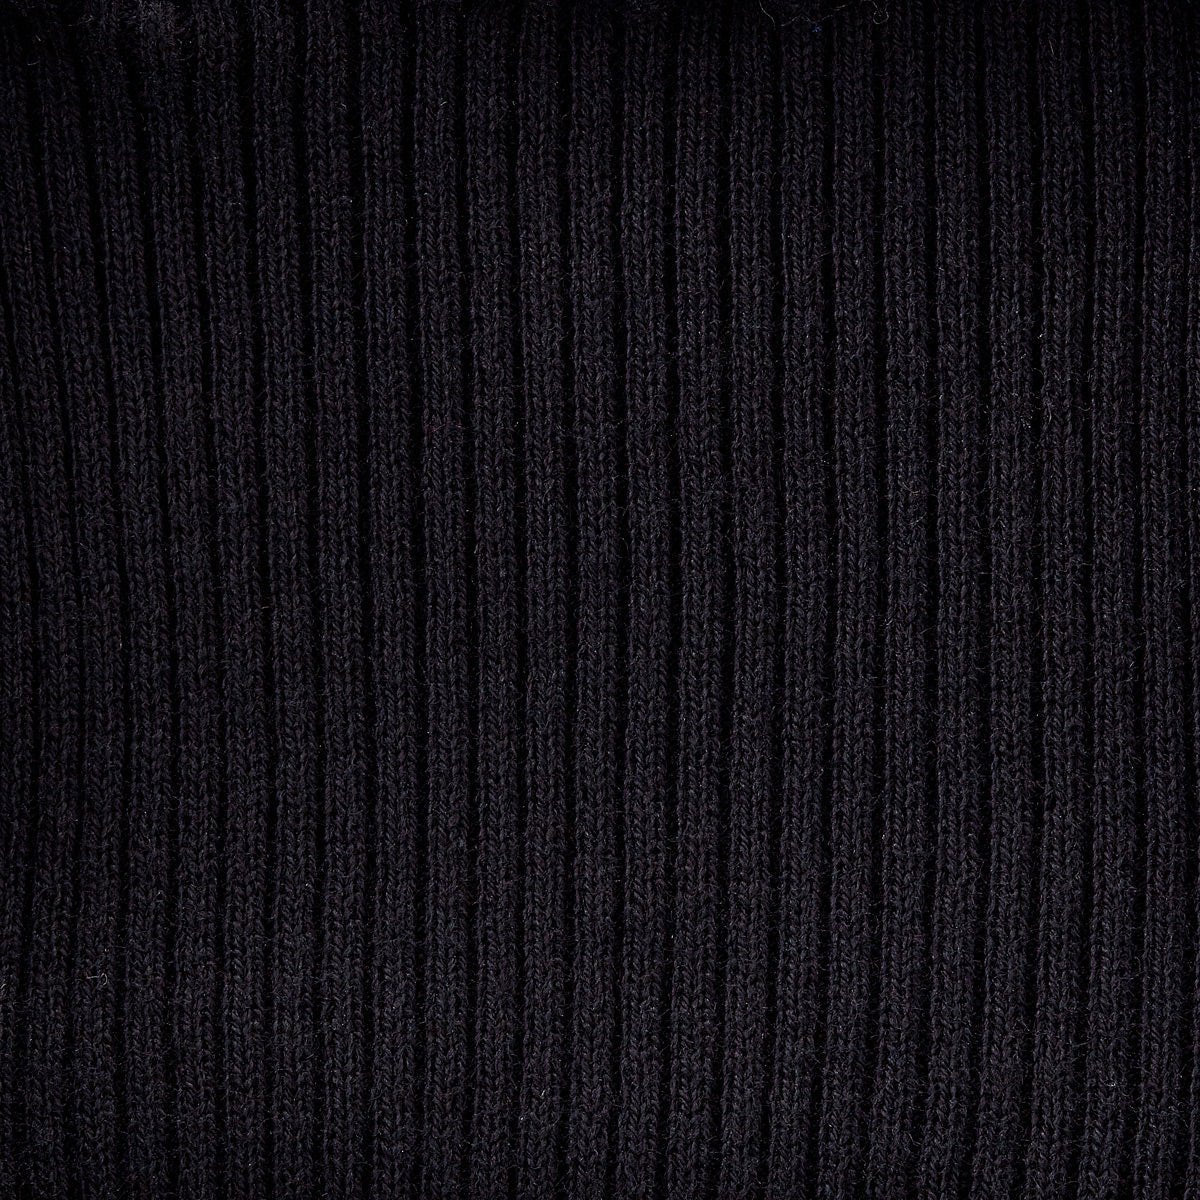 100% Cotton Turtle Neck Sweater - 13-6601-951-05-90